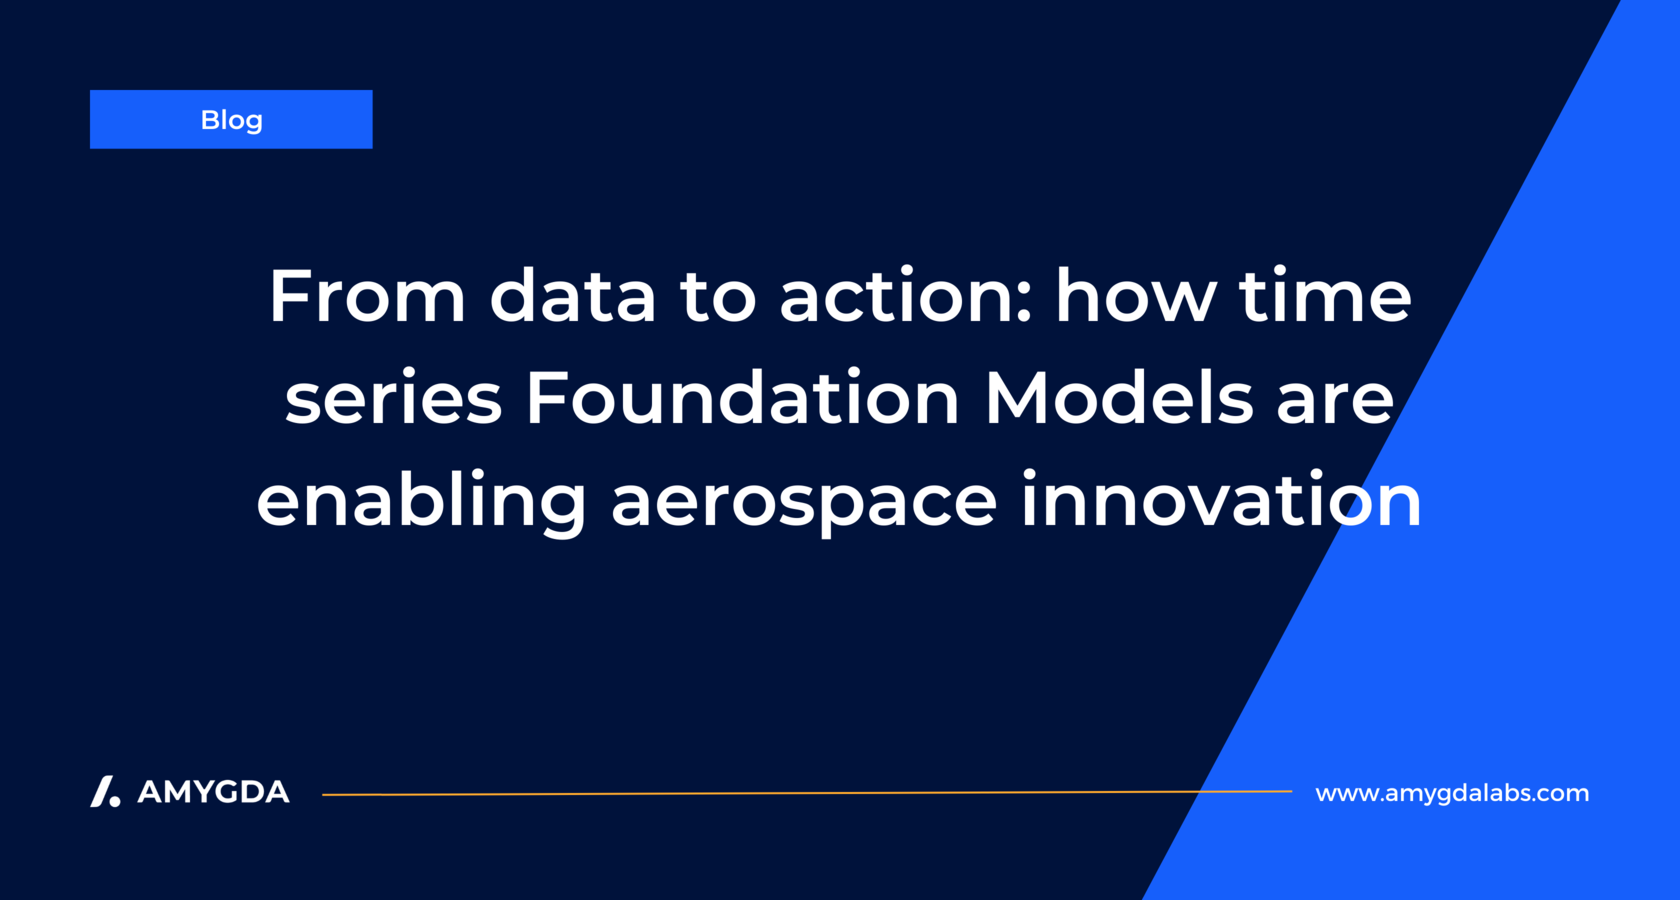 Foundation Models for aerospace innovation